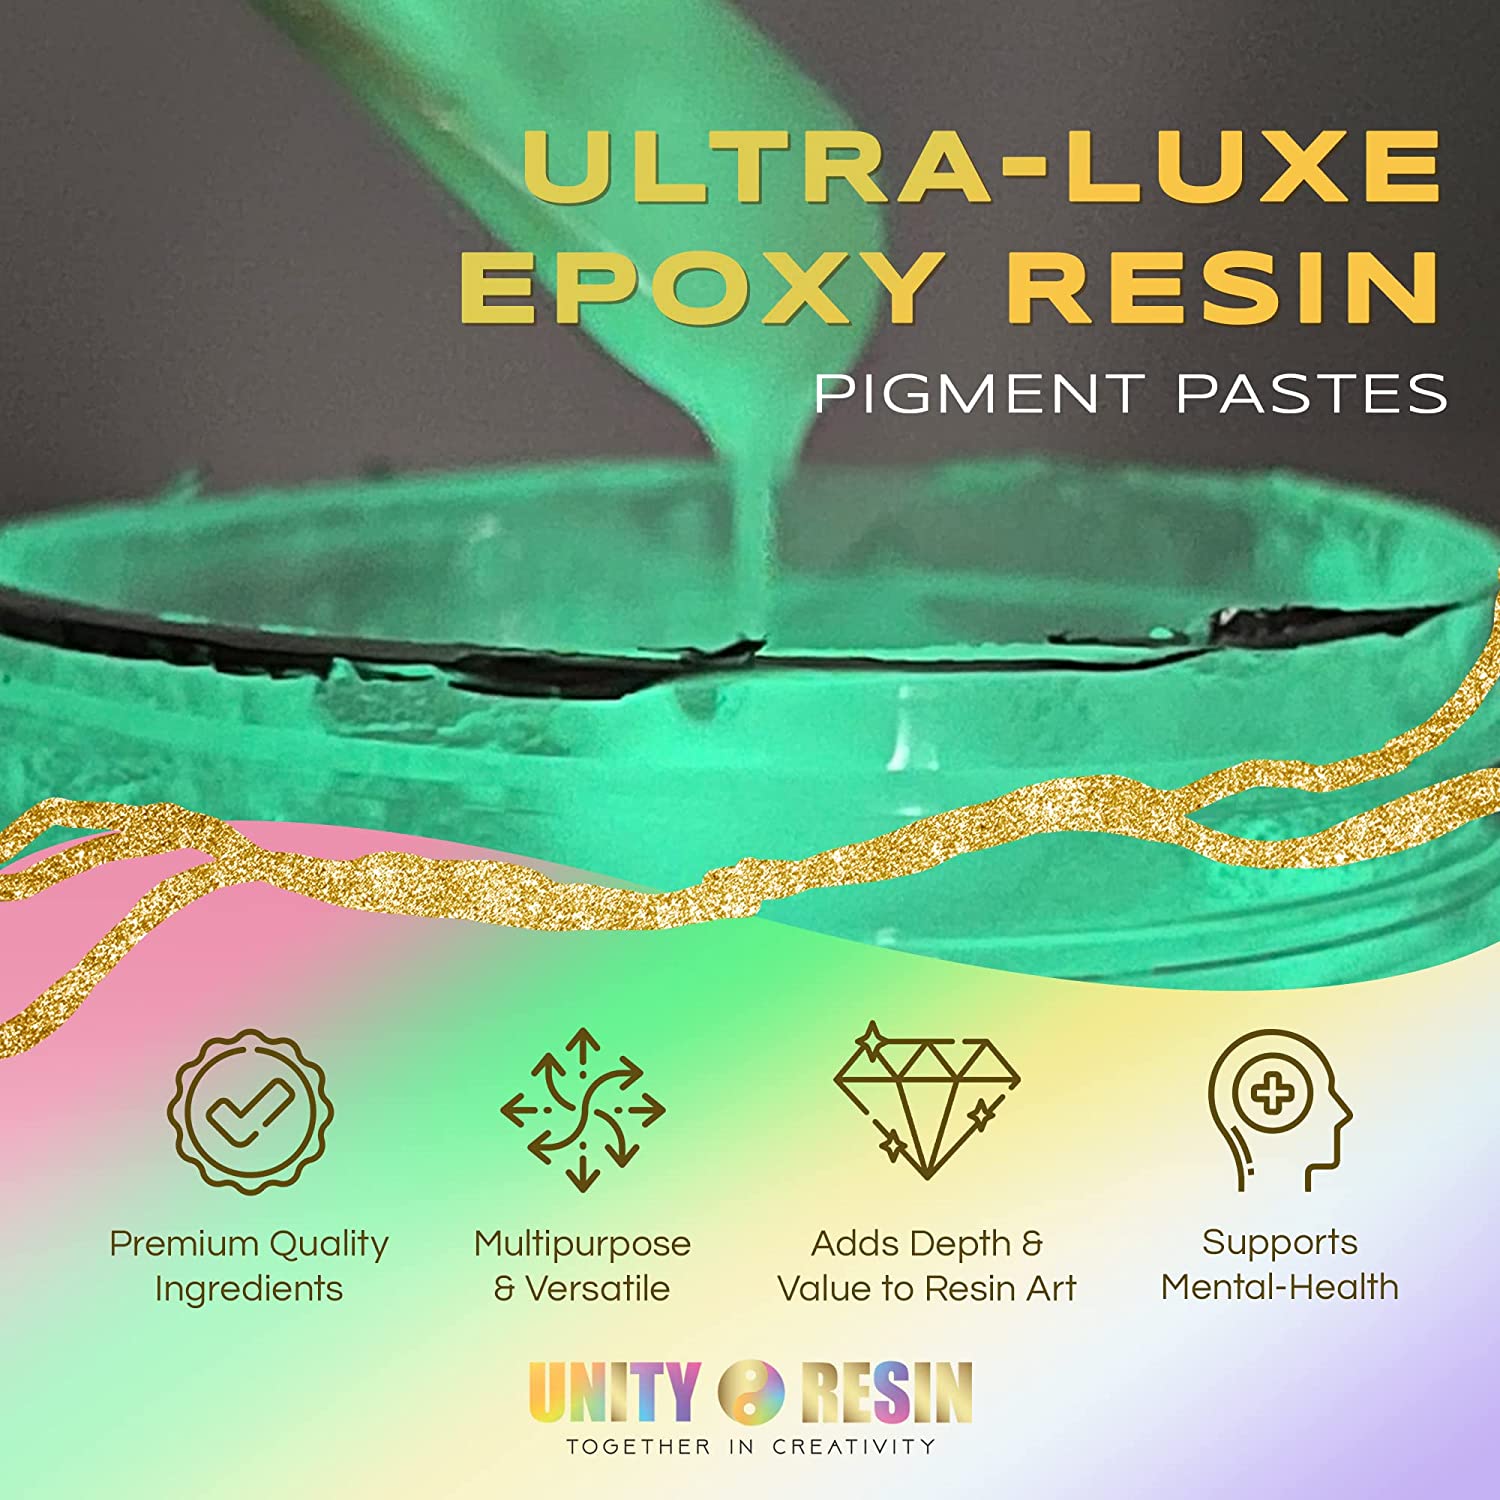 10 Colors Glowing In Dark Epoxy Resin Pigment Kit Luminous